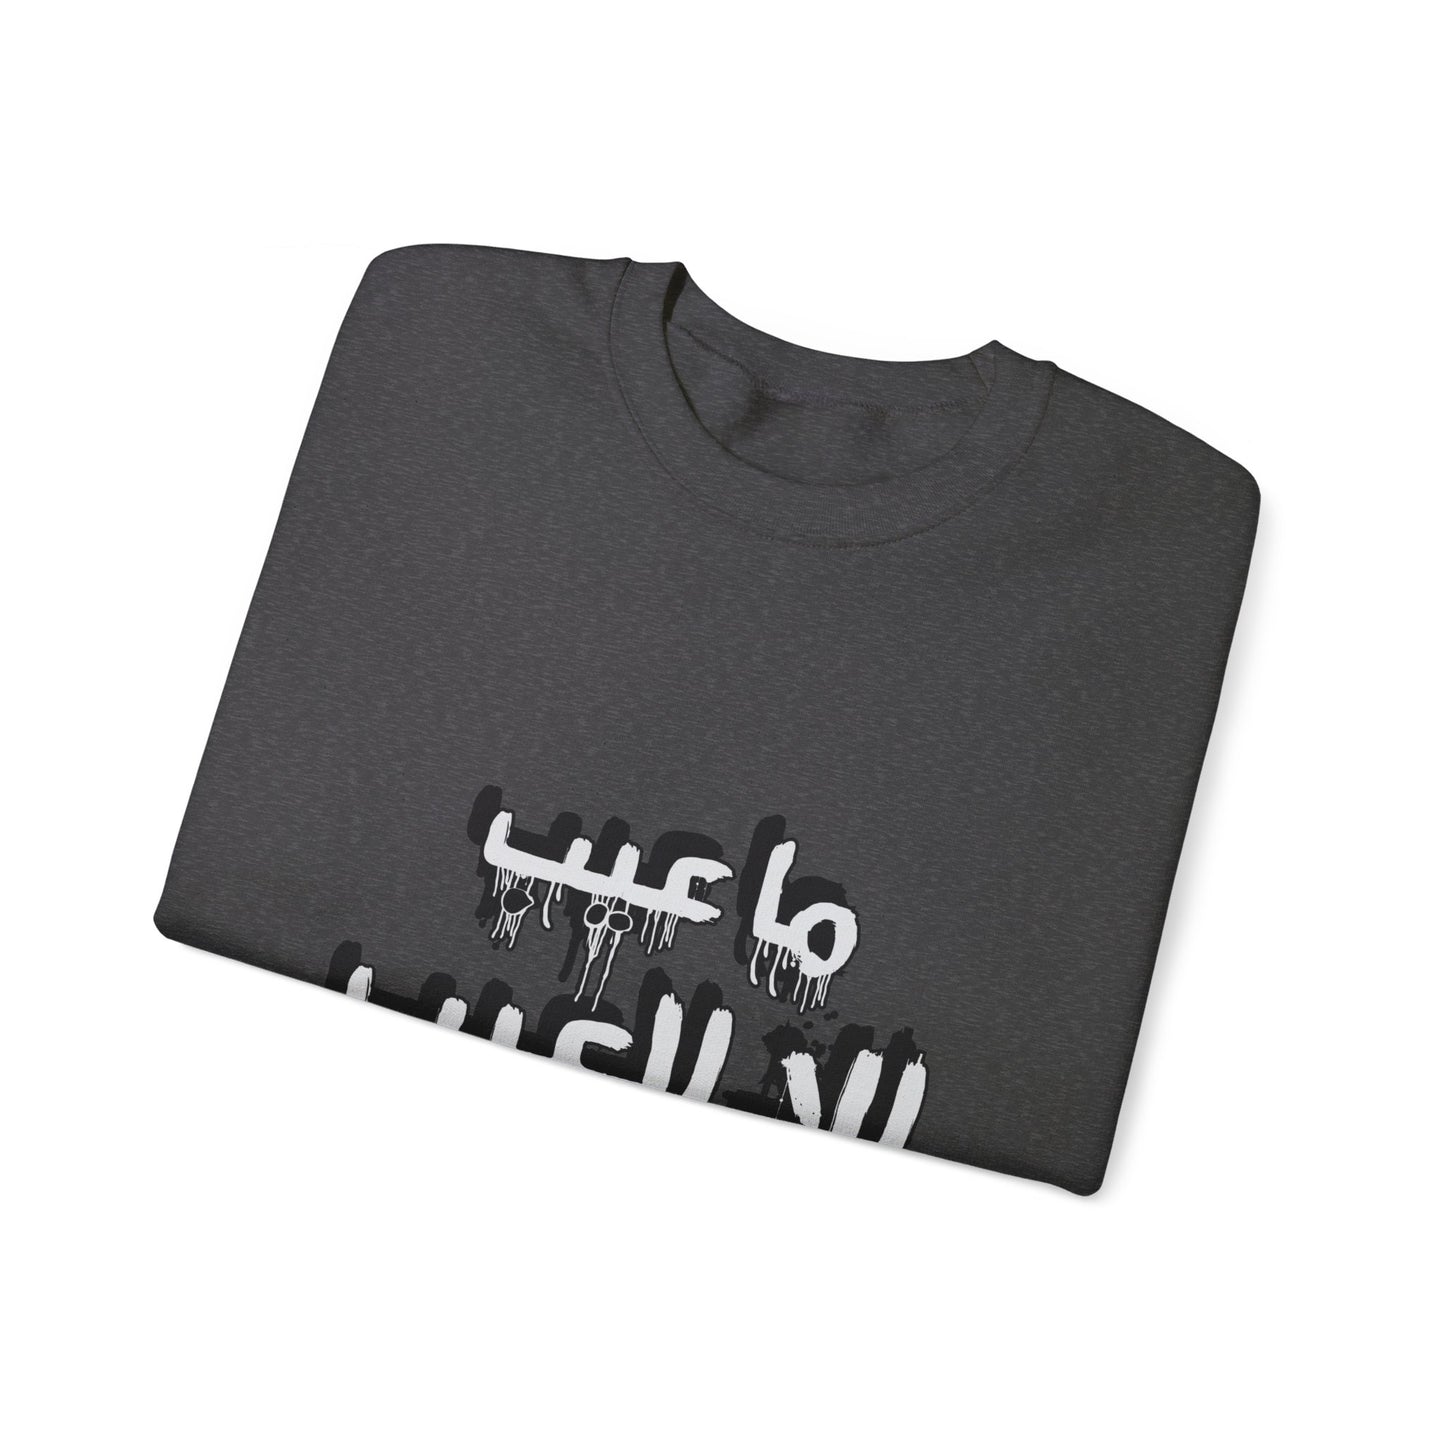 ما عيب إلا العيب | nothing is inappropriate except what is inappropriate! | Unisex EcoSmart® Crewneck Sweatshirt